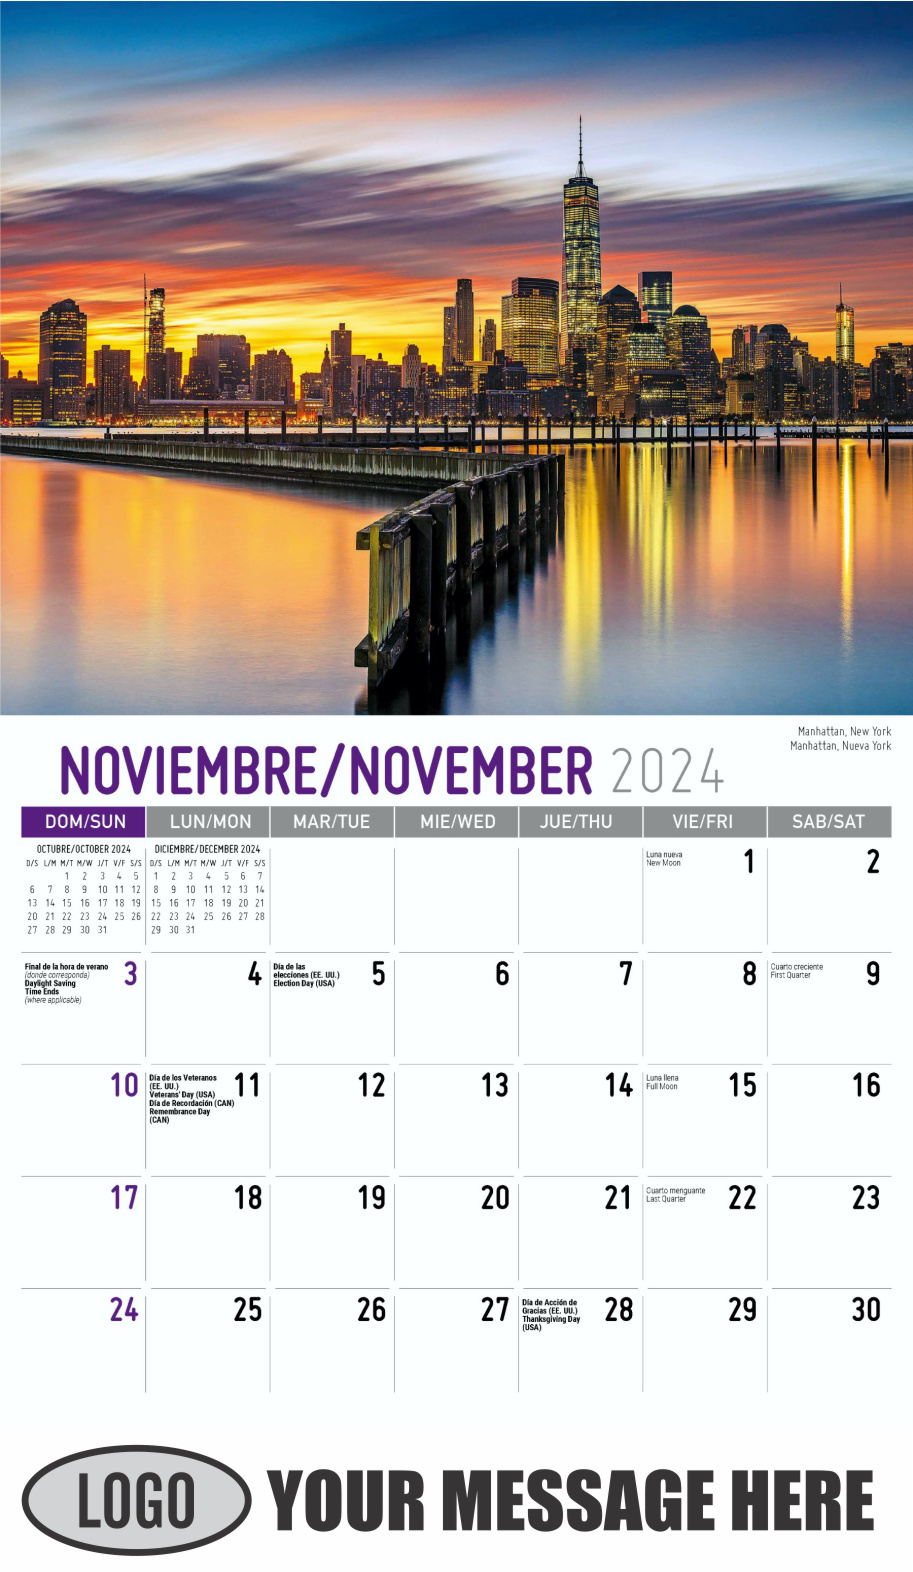 Scenes of America 2024 Bilingual Business Promo Calendar - November